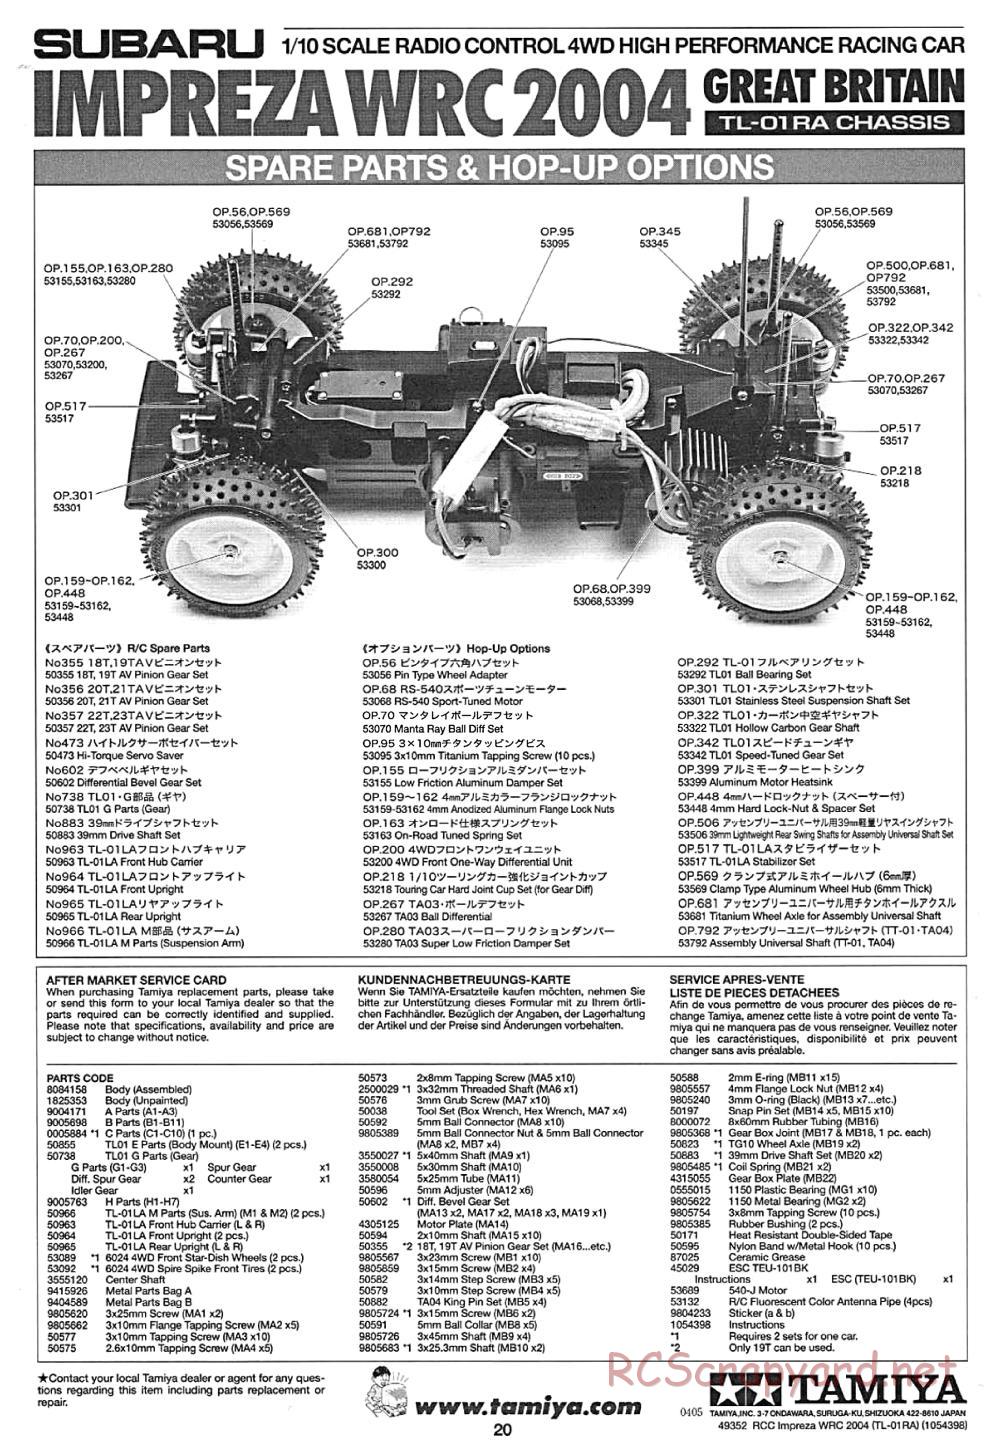 Tamiya - Subaru Impreza WRC 2004 Chassis - Manual - Page 20